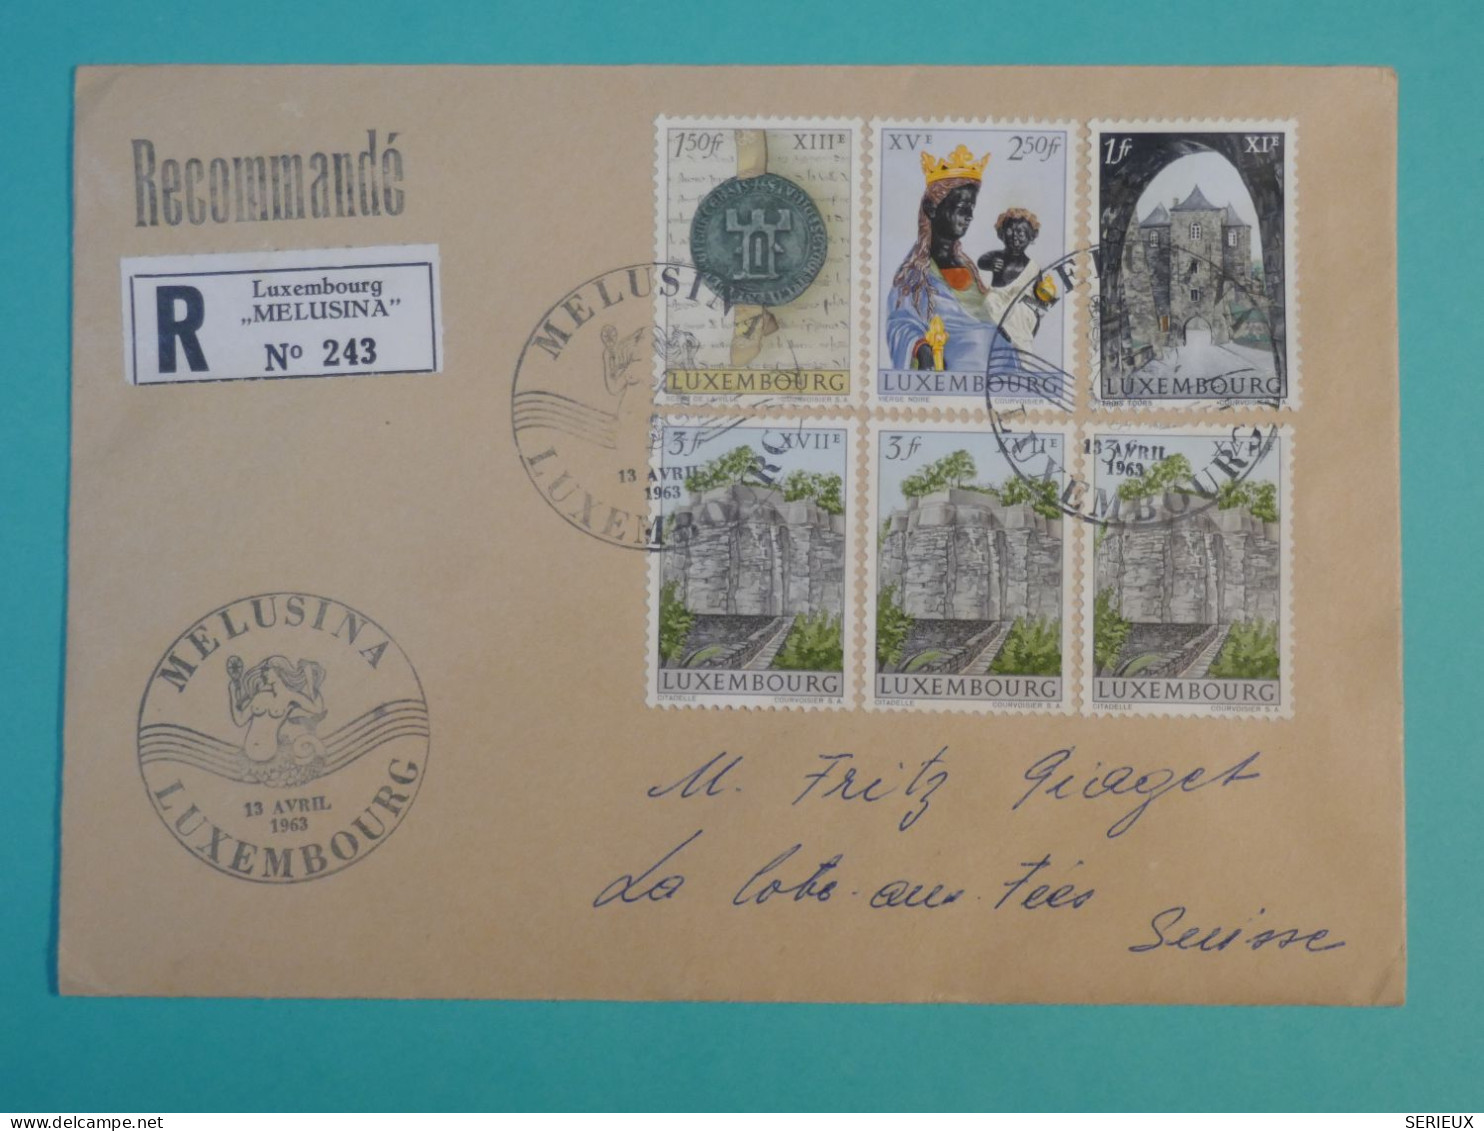 AG0  LUXEMBOURG  BELLE LETTRE RECO  1963    MELUSINA A LA COTE AUX FEES  SUISSE+   +AFF. INTERESSANT++ + - Covers & Documents